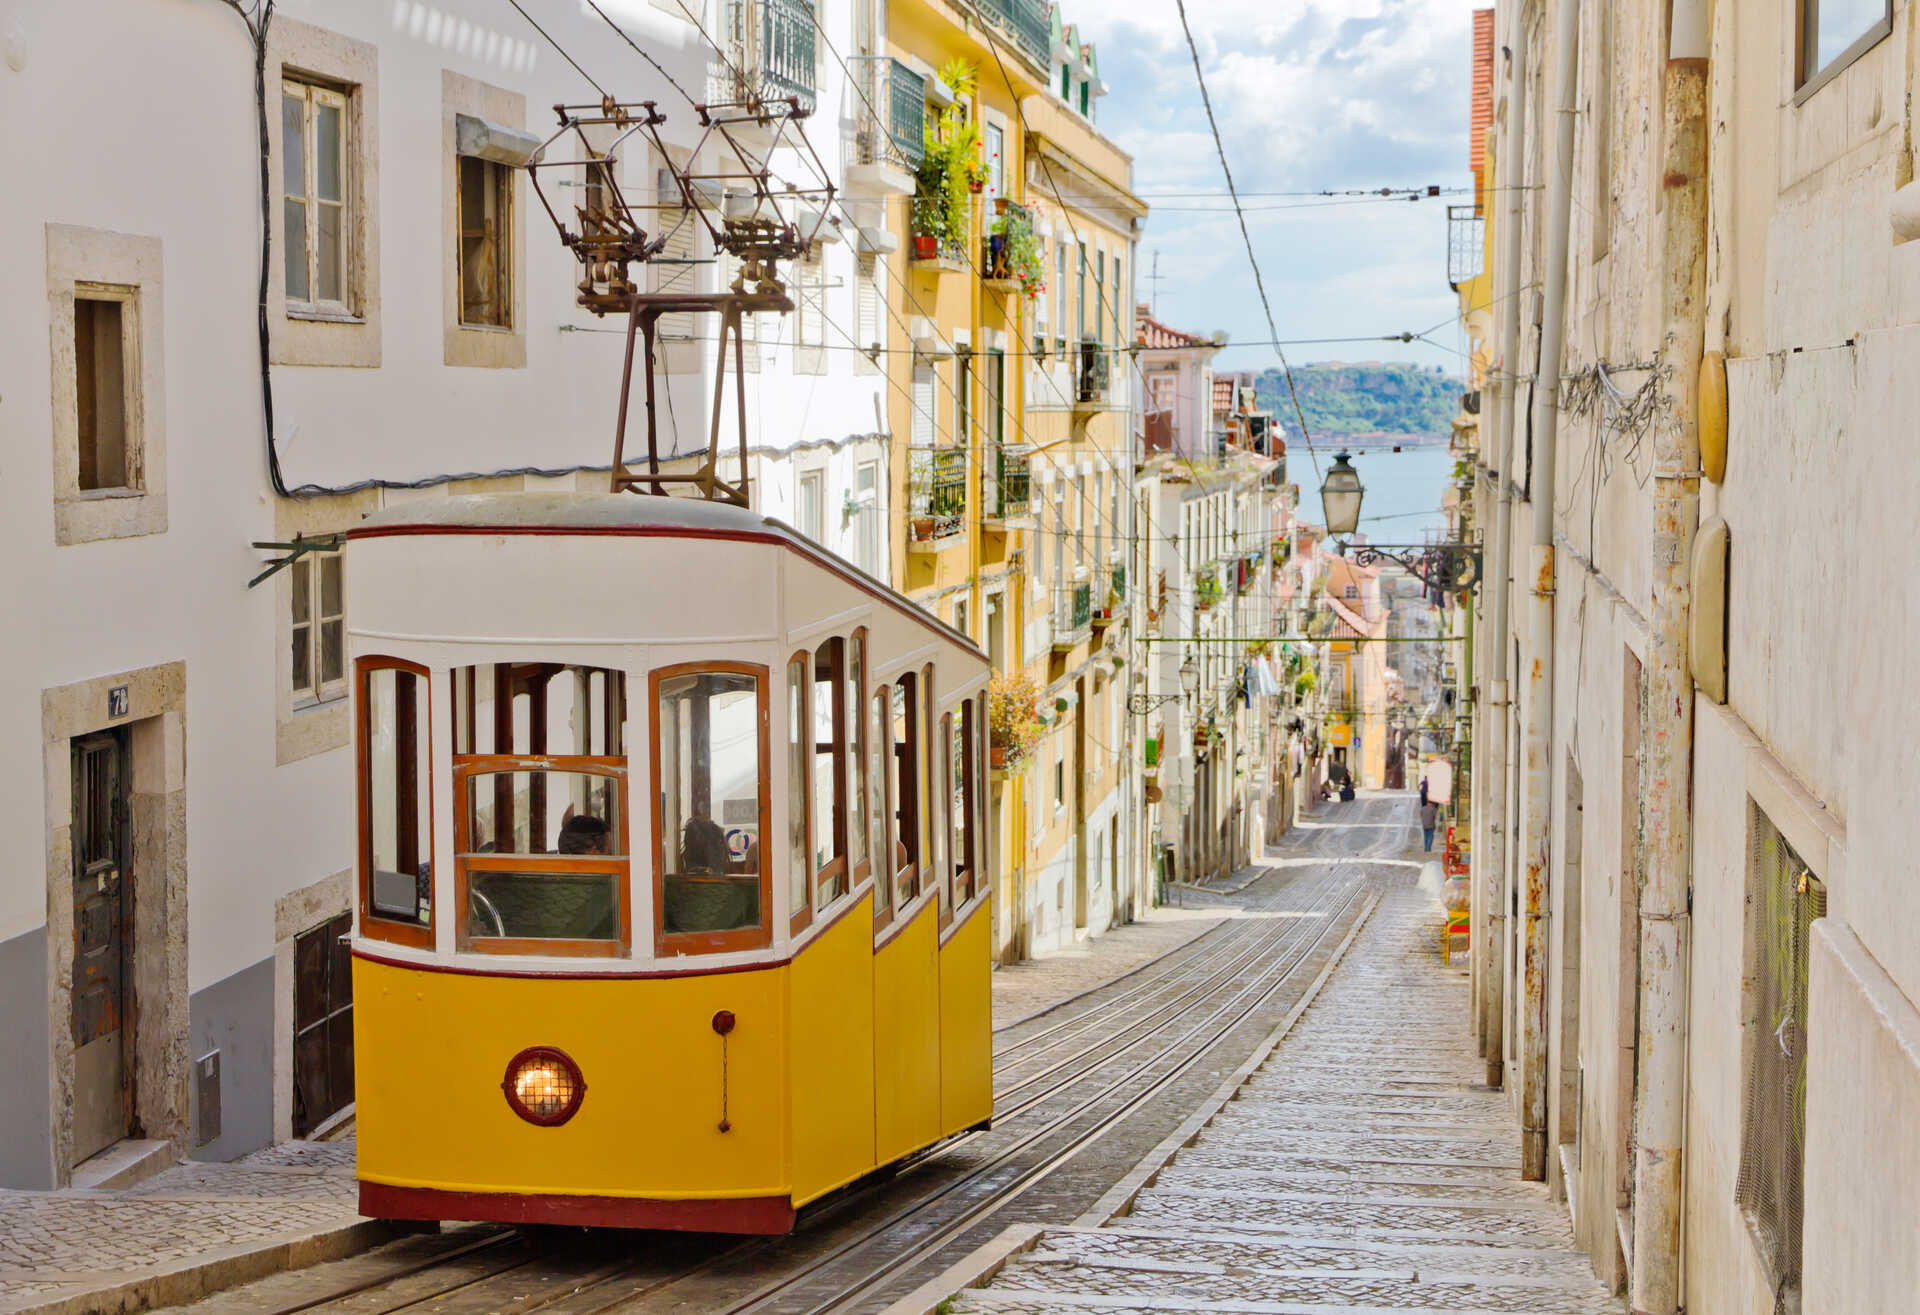 Yellow tram in the narrow street